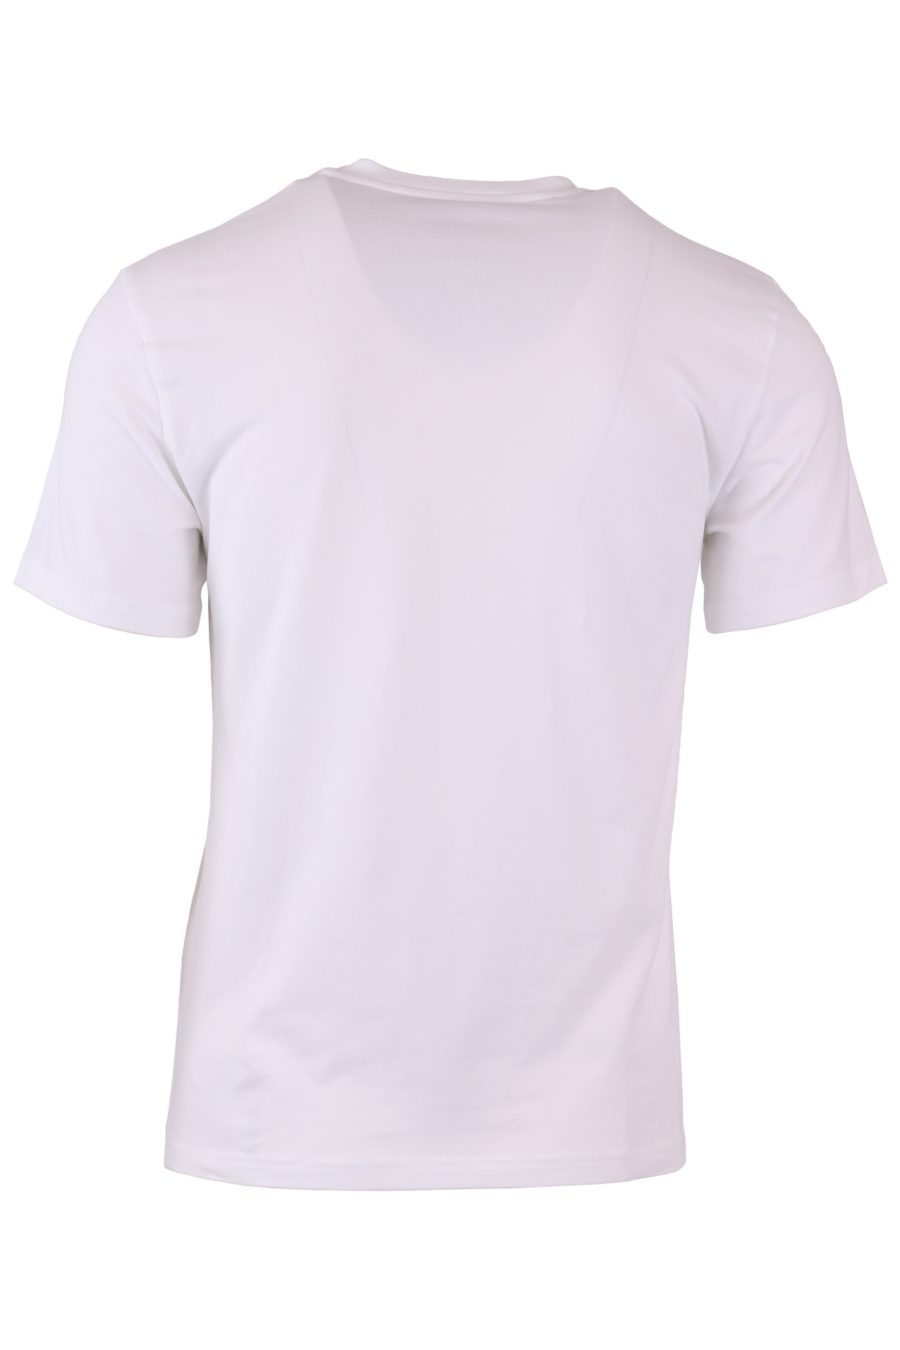 Moschino Couture weißes T-Shirt mit Logo und doppelter Frage vorne - b005ef040599c9aaad43e541ce04a7022decaf84